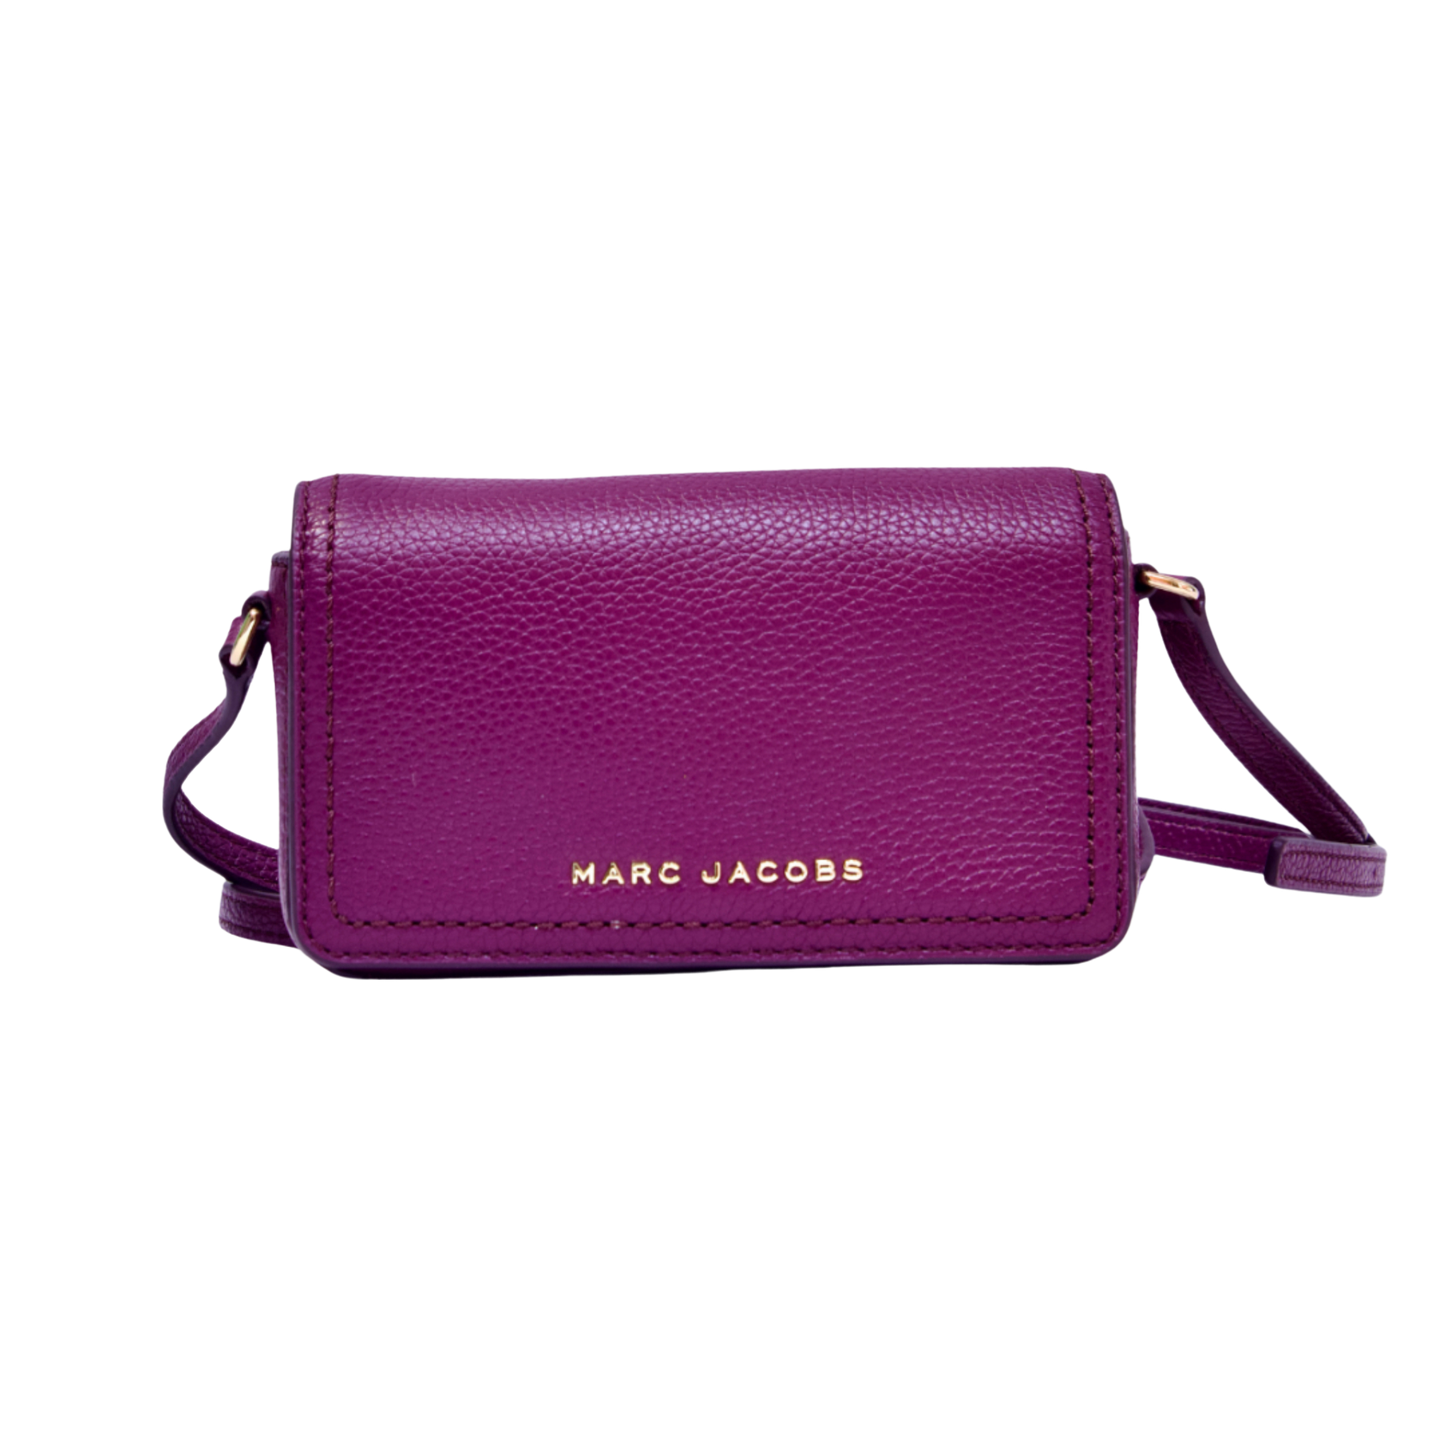 Marc Jacobs Groove Leather Mini Crossbody Bag in Prune